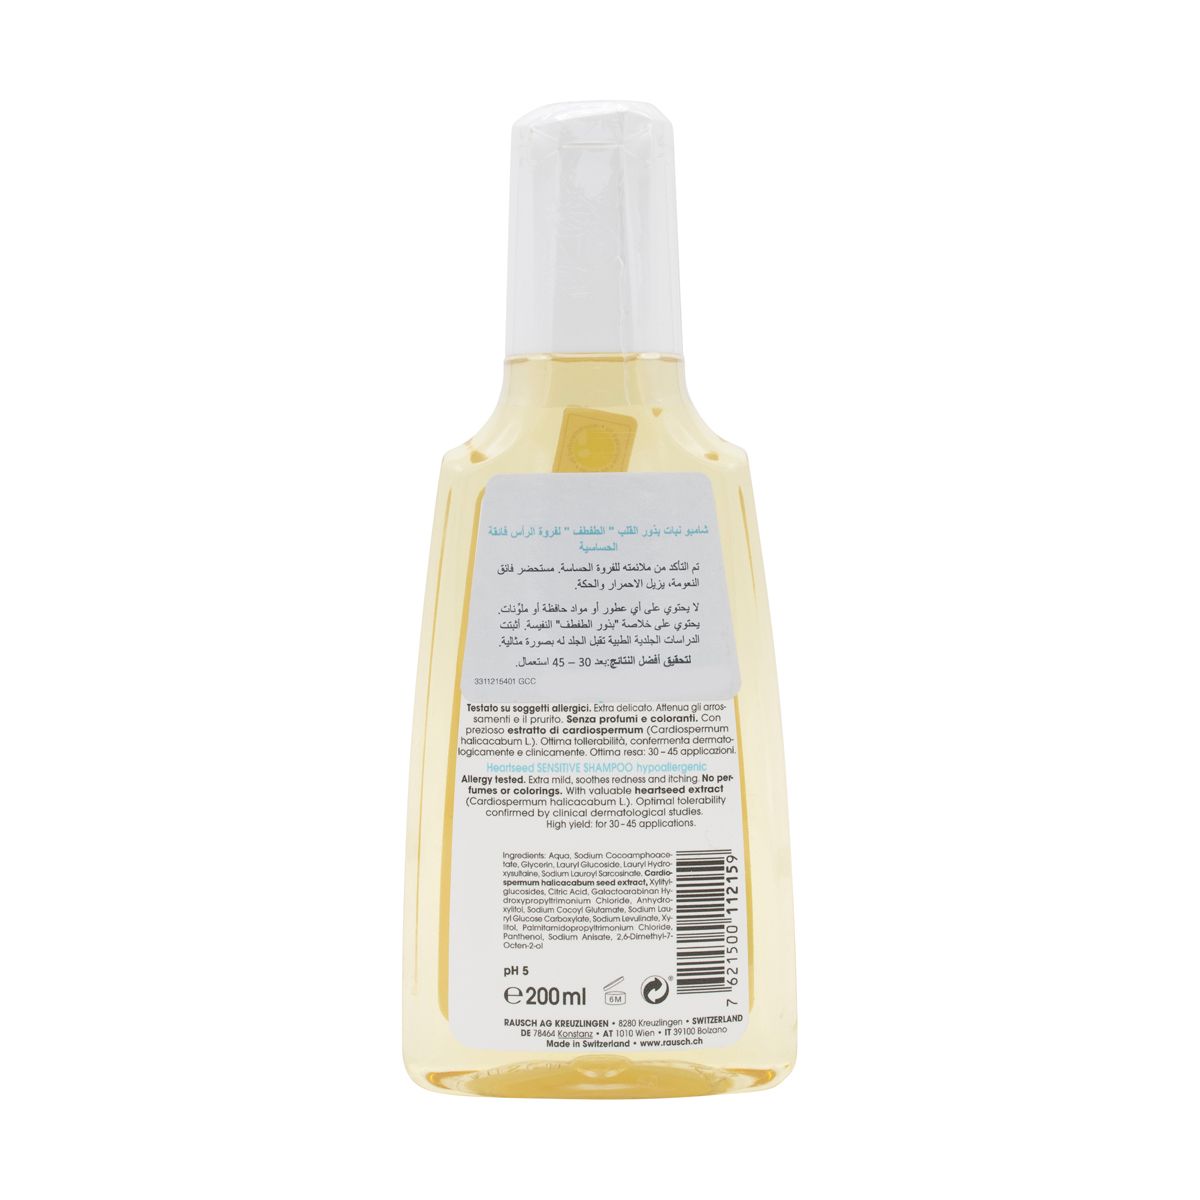 Heartseed Sensitive Shampoo Hypoallergenic 200Ml